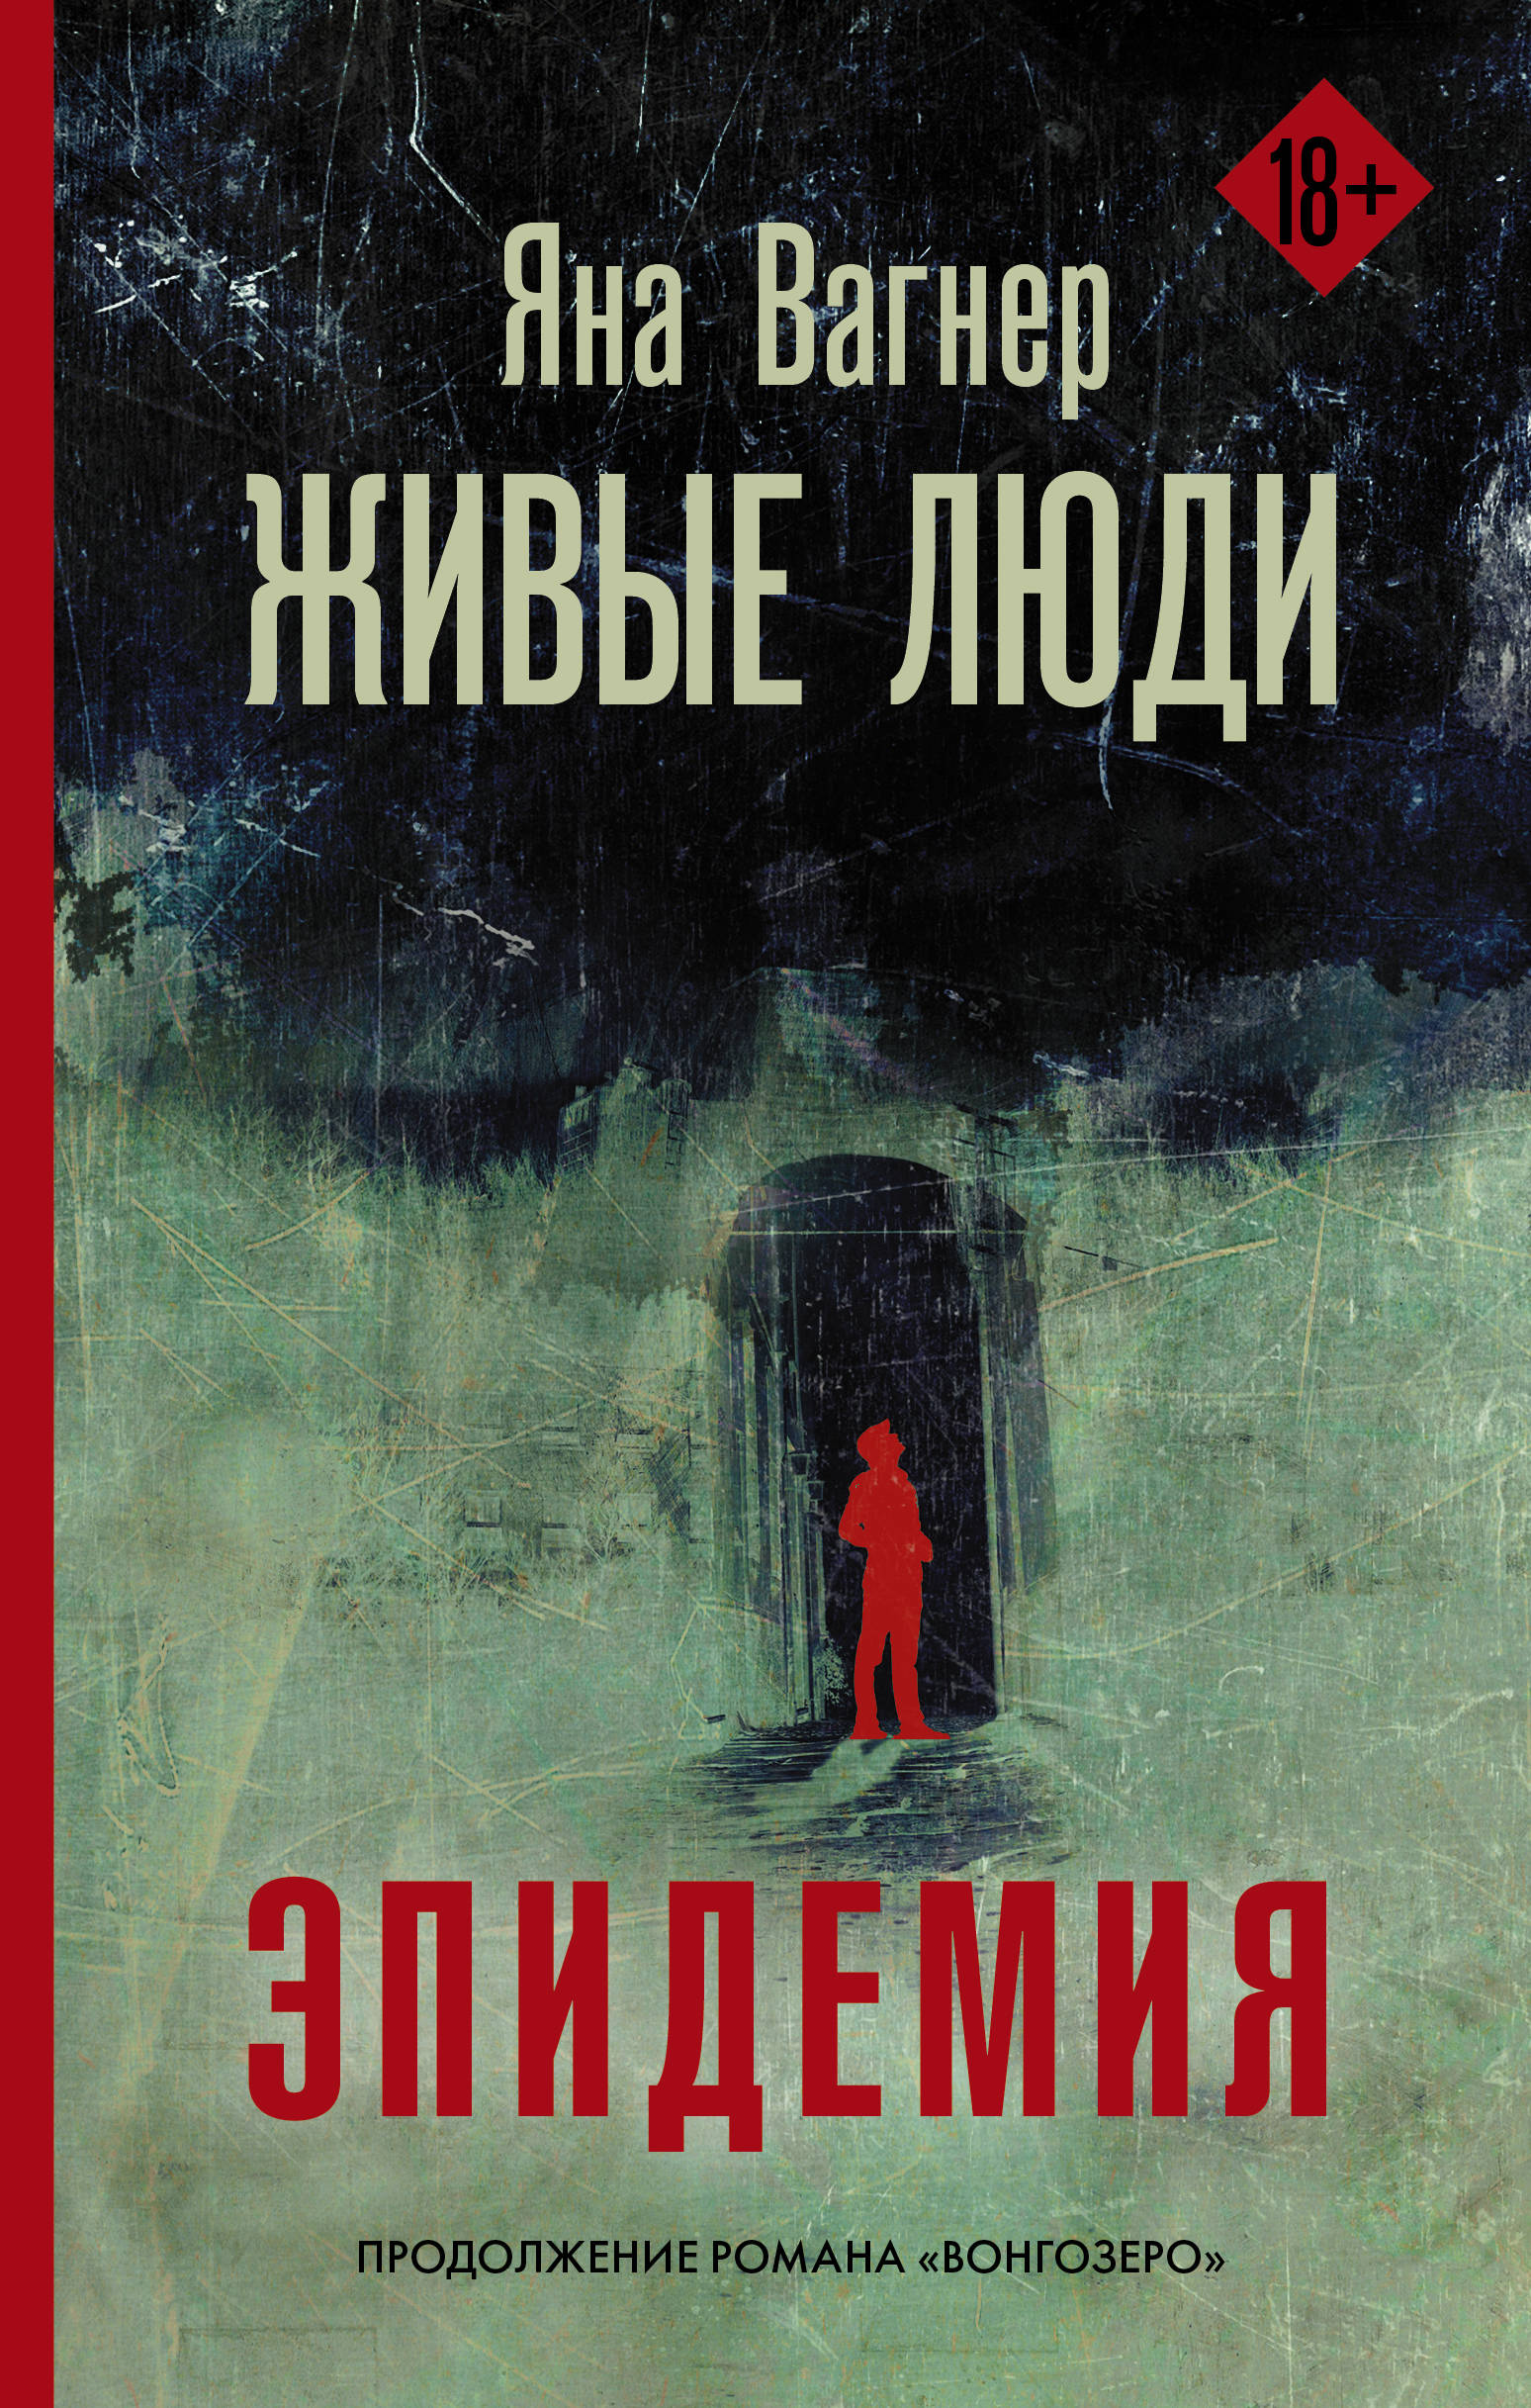 Book “Живые люди” by Яна Вагнер — January 17, 2020